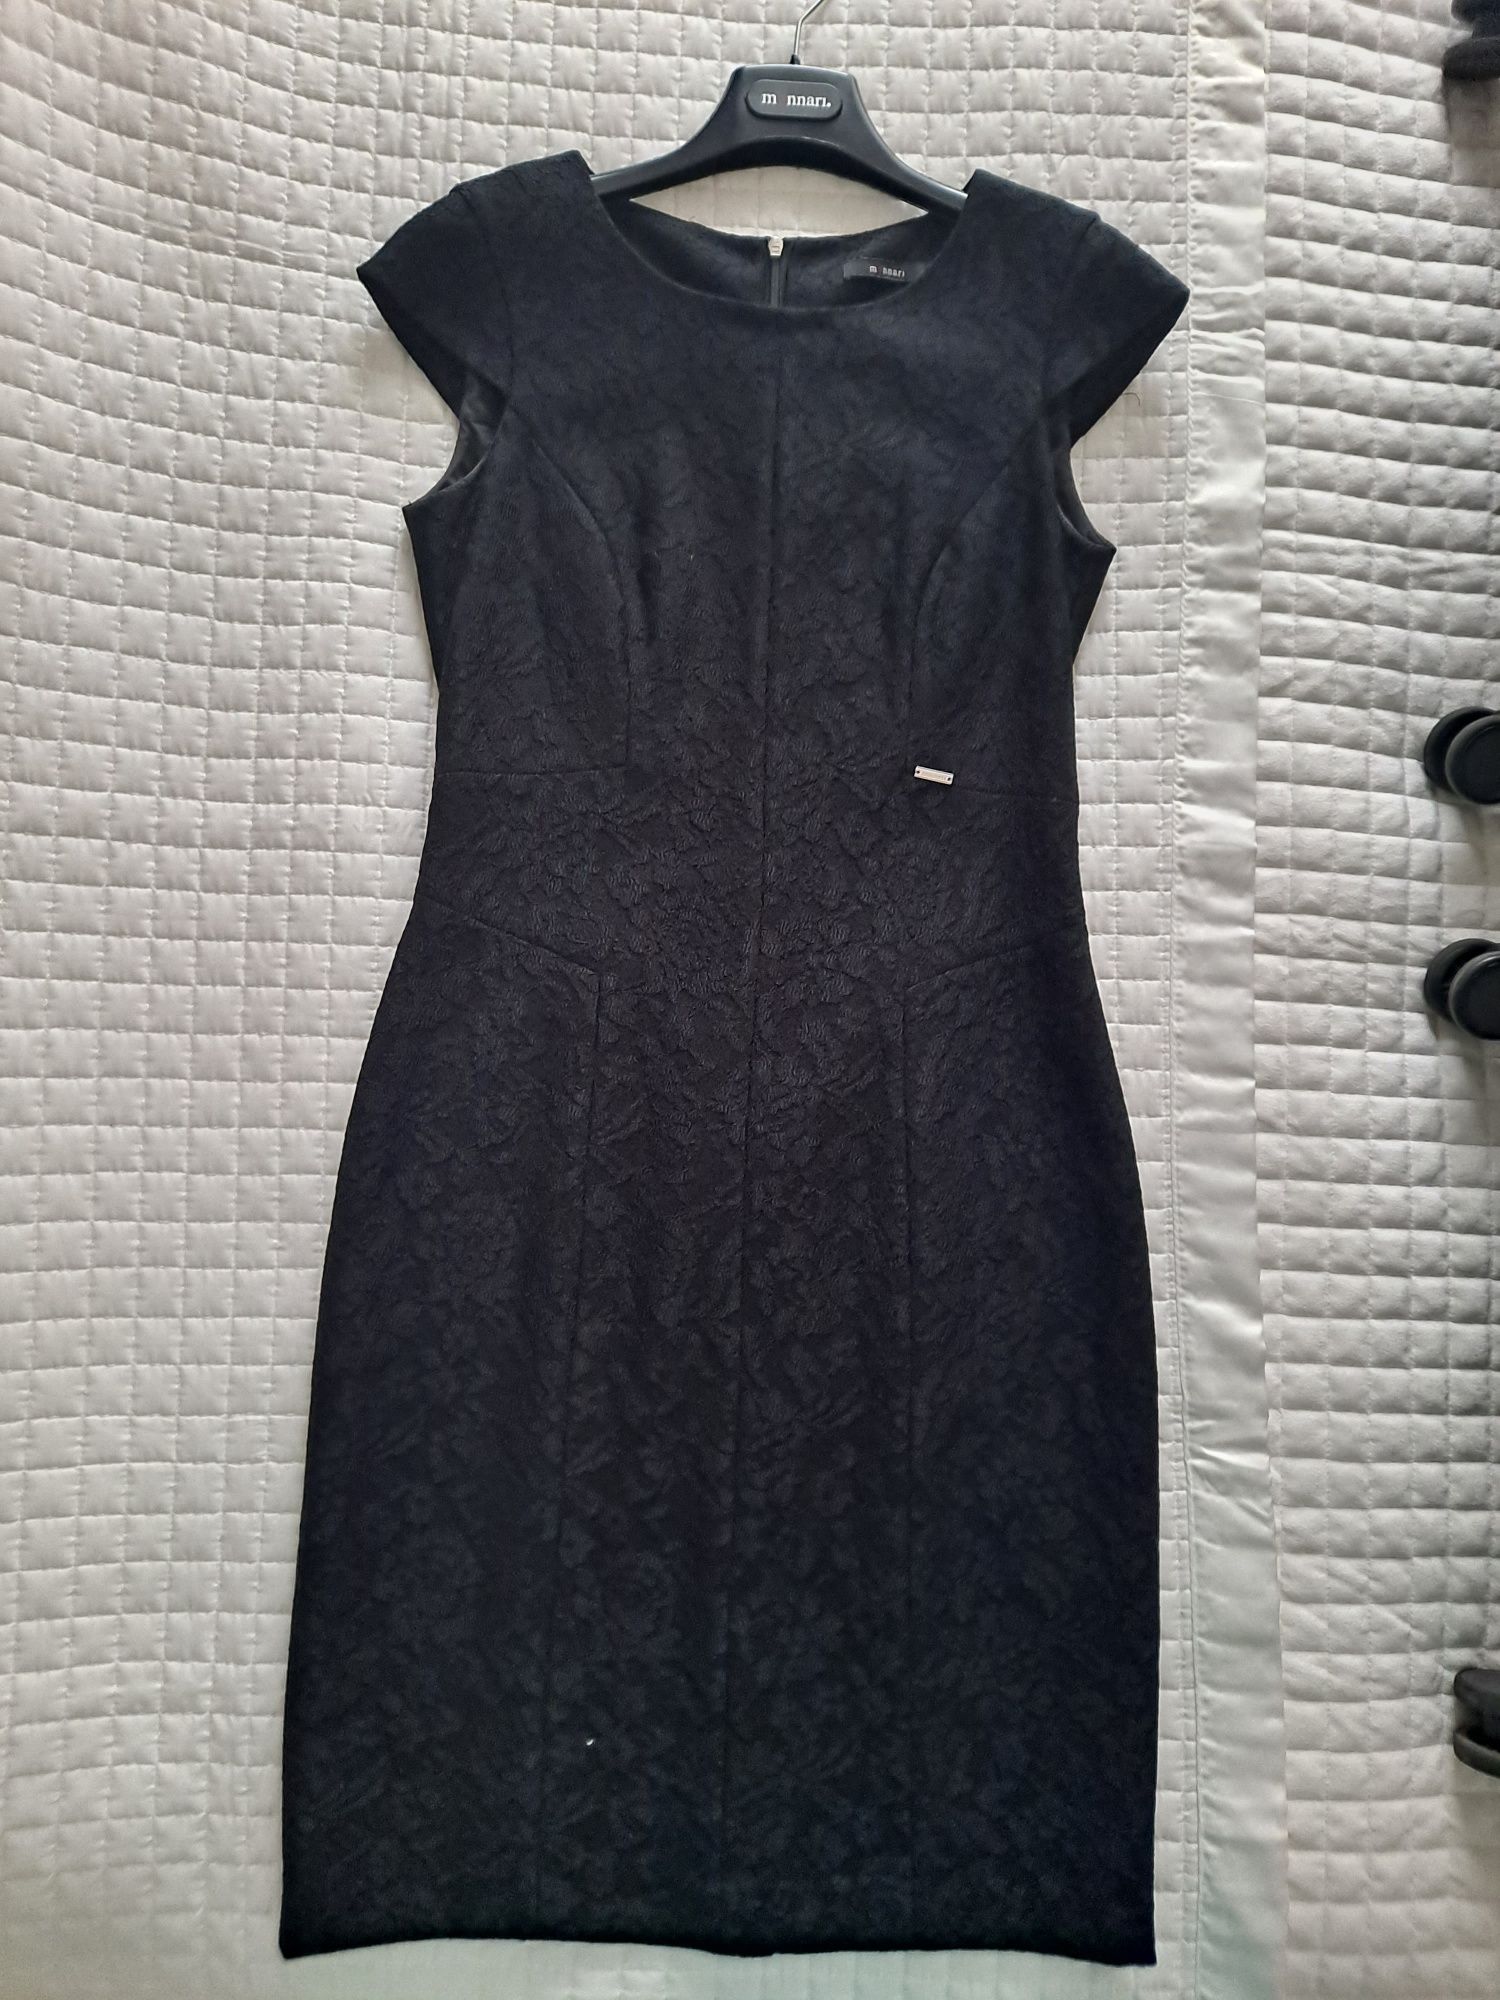 Czarna koronkowa sukienka Monnari r.36